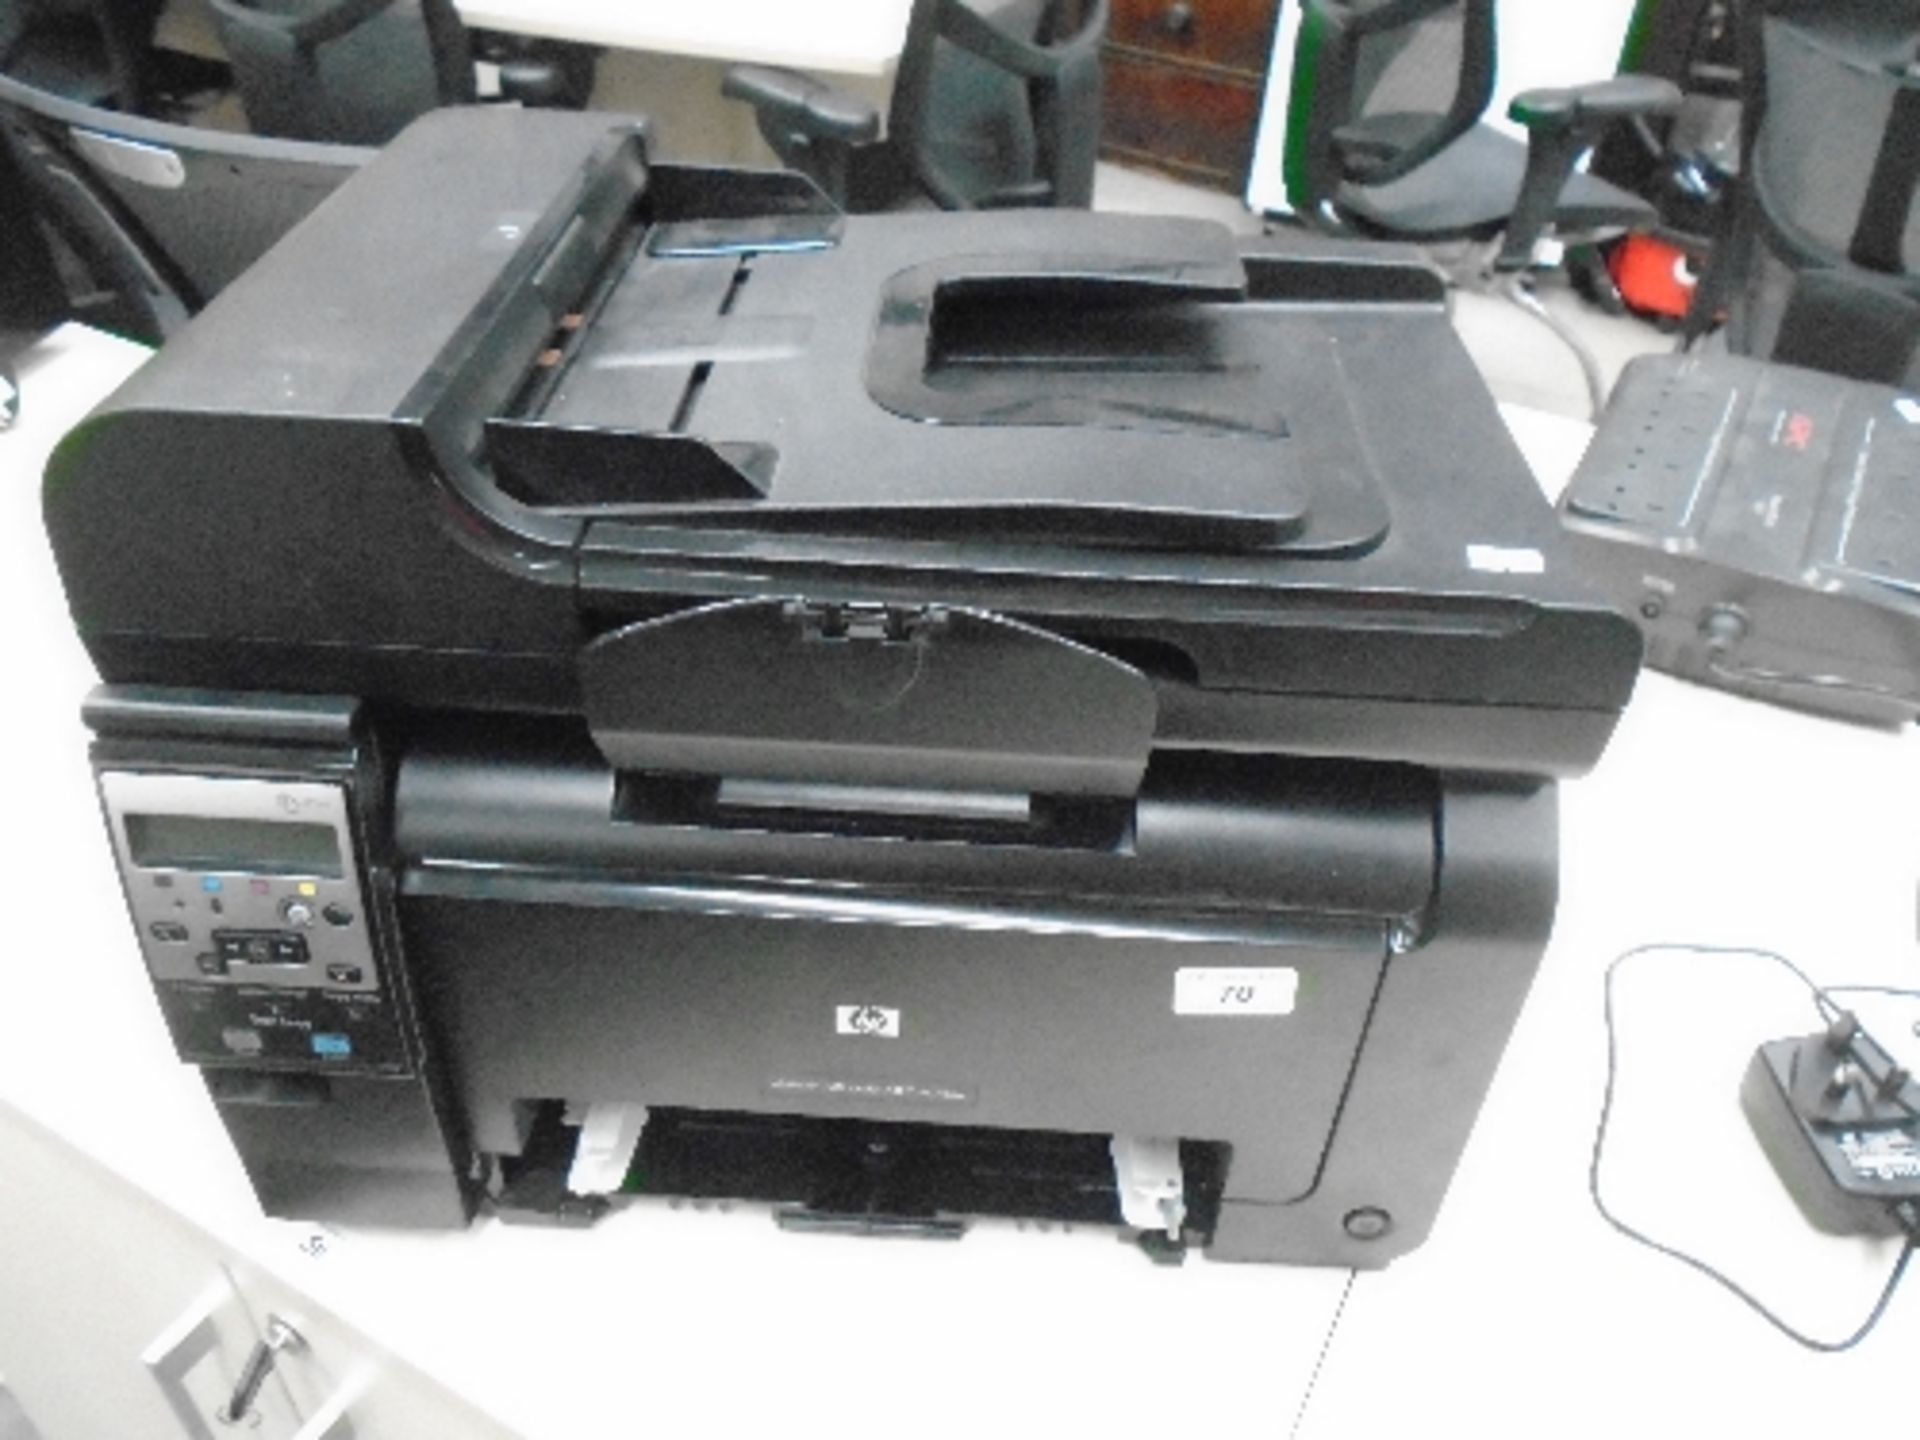 A HP Laserjet 100 colour MFP M175NW printer scanner - power lead